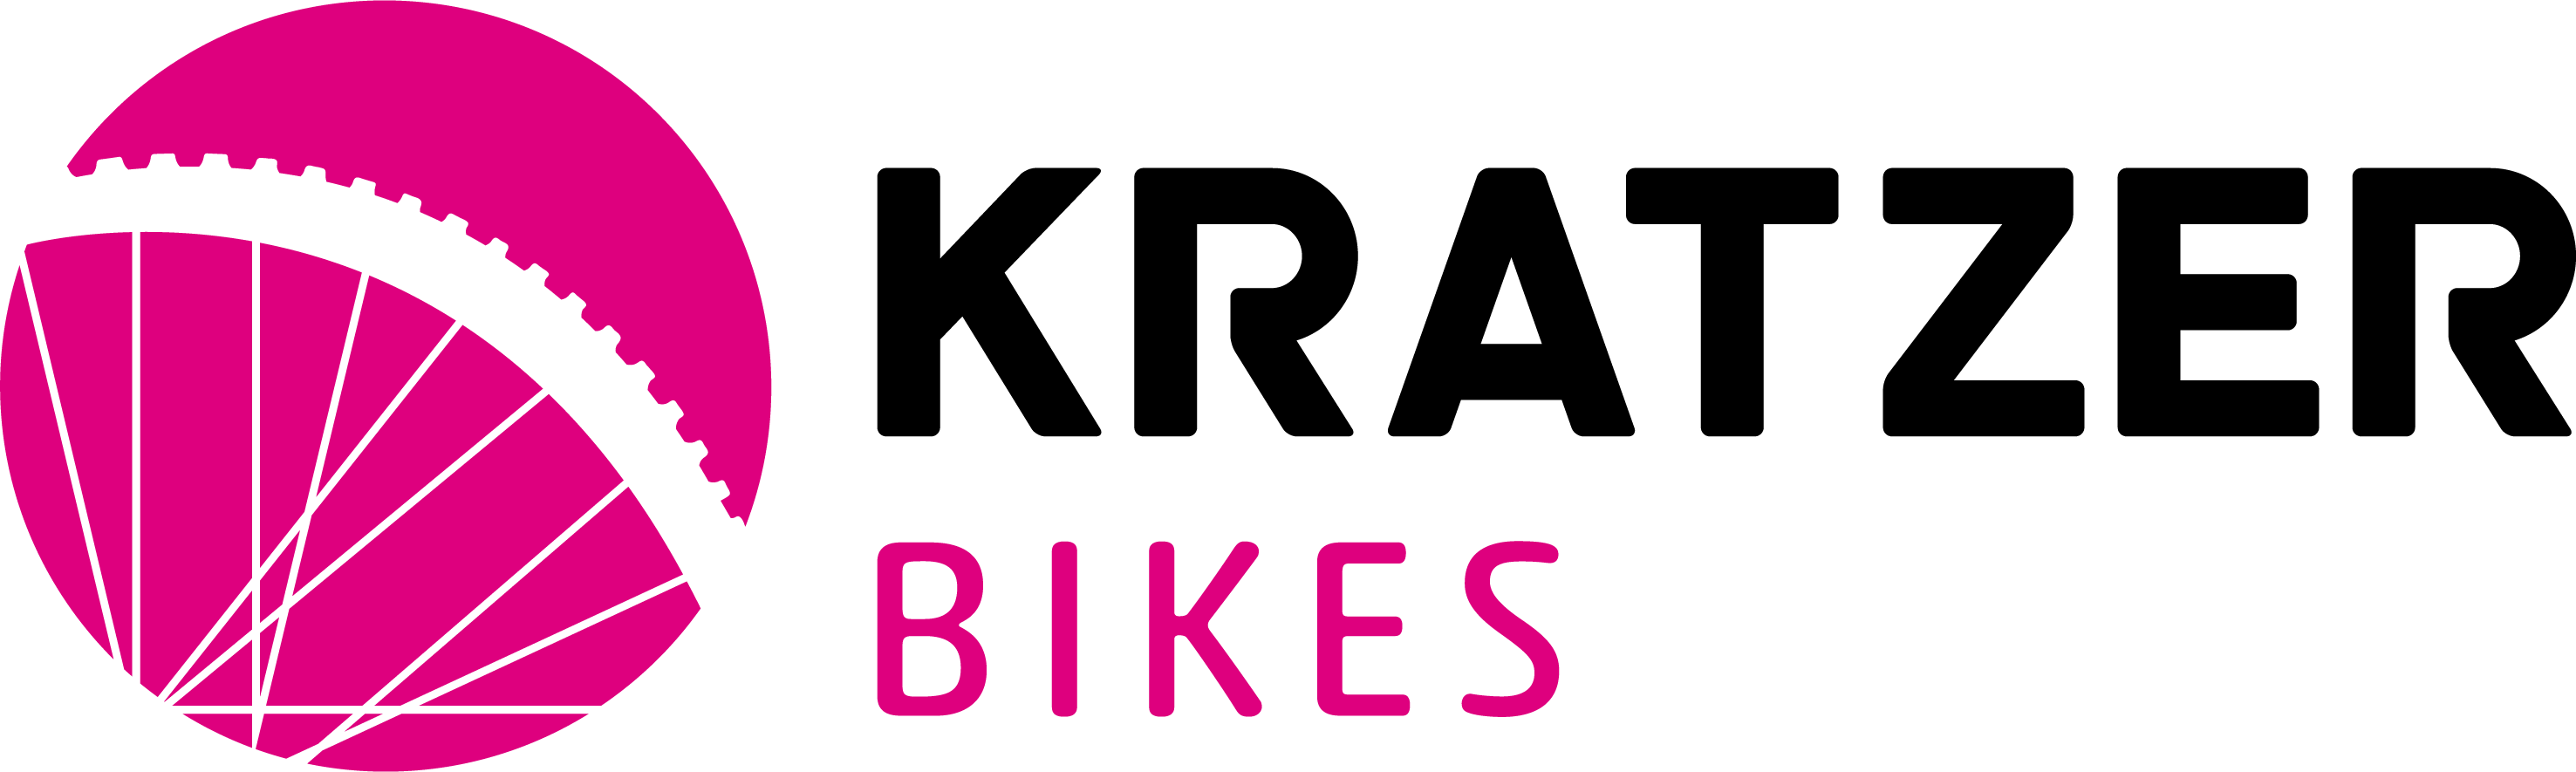 https://www.kratzer-bikes.de/wp-content/uploads/2018/02/kratzer_bikes_pfaffenhofen_fahrrad-1.png